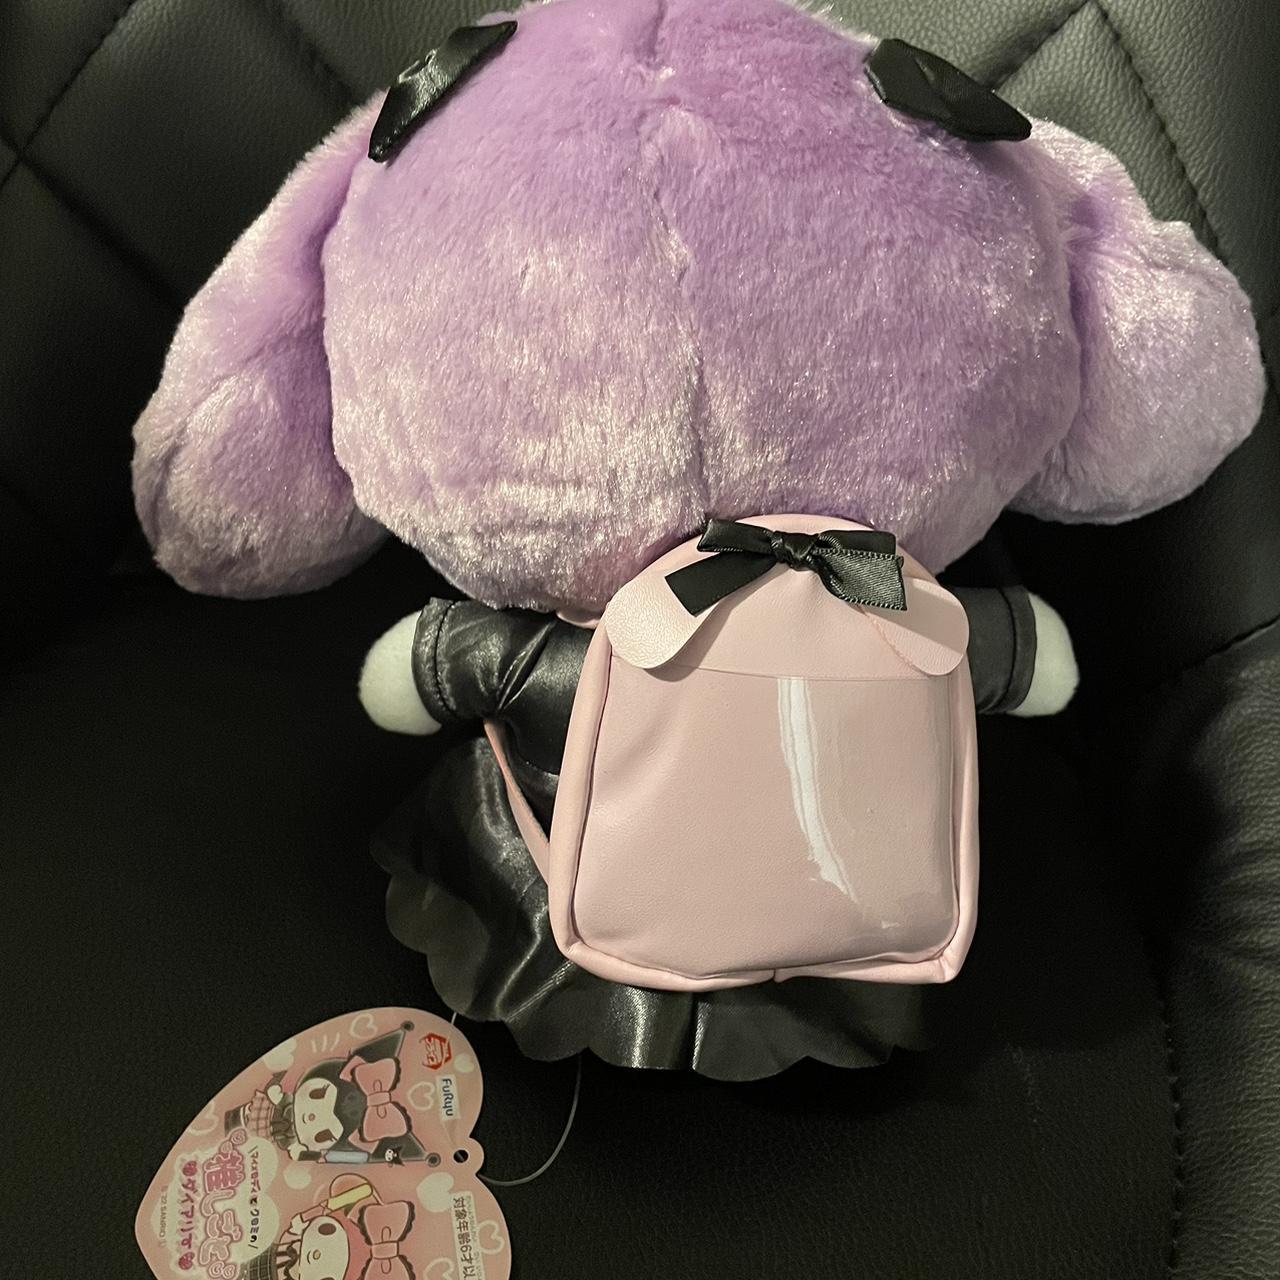 Sanrio My Melody plush backpack gothic lolita - Depop